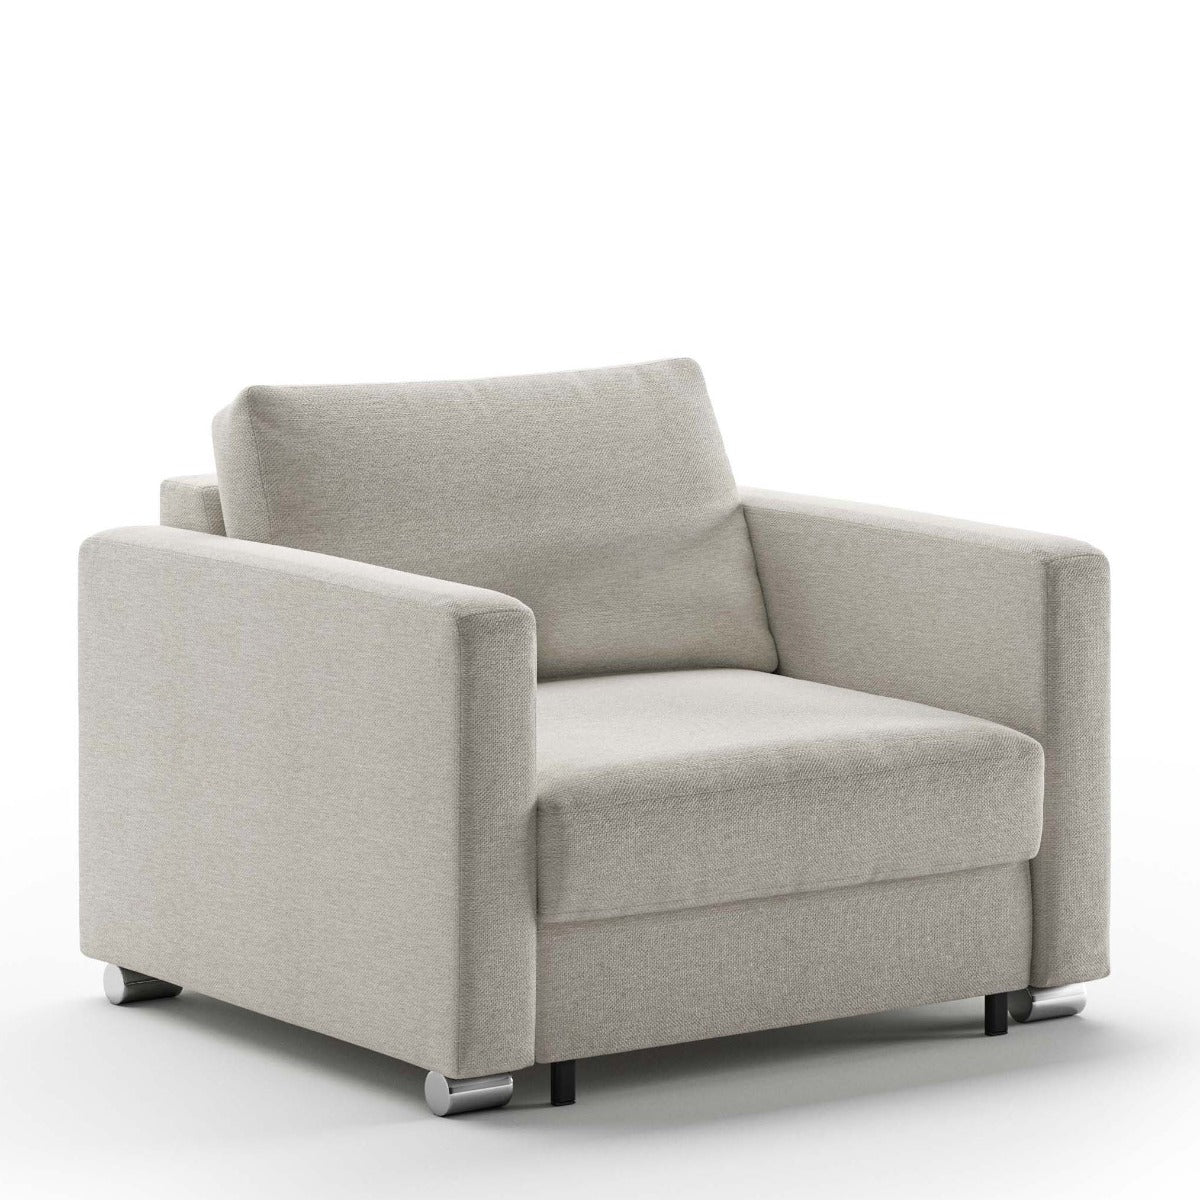 Luonto Furniture Fantasy Cot Chair Sleeper - Fun 496 - 217/6 Chrome